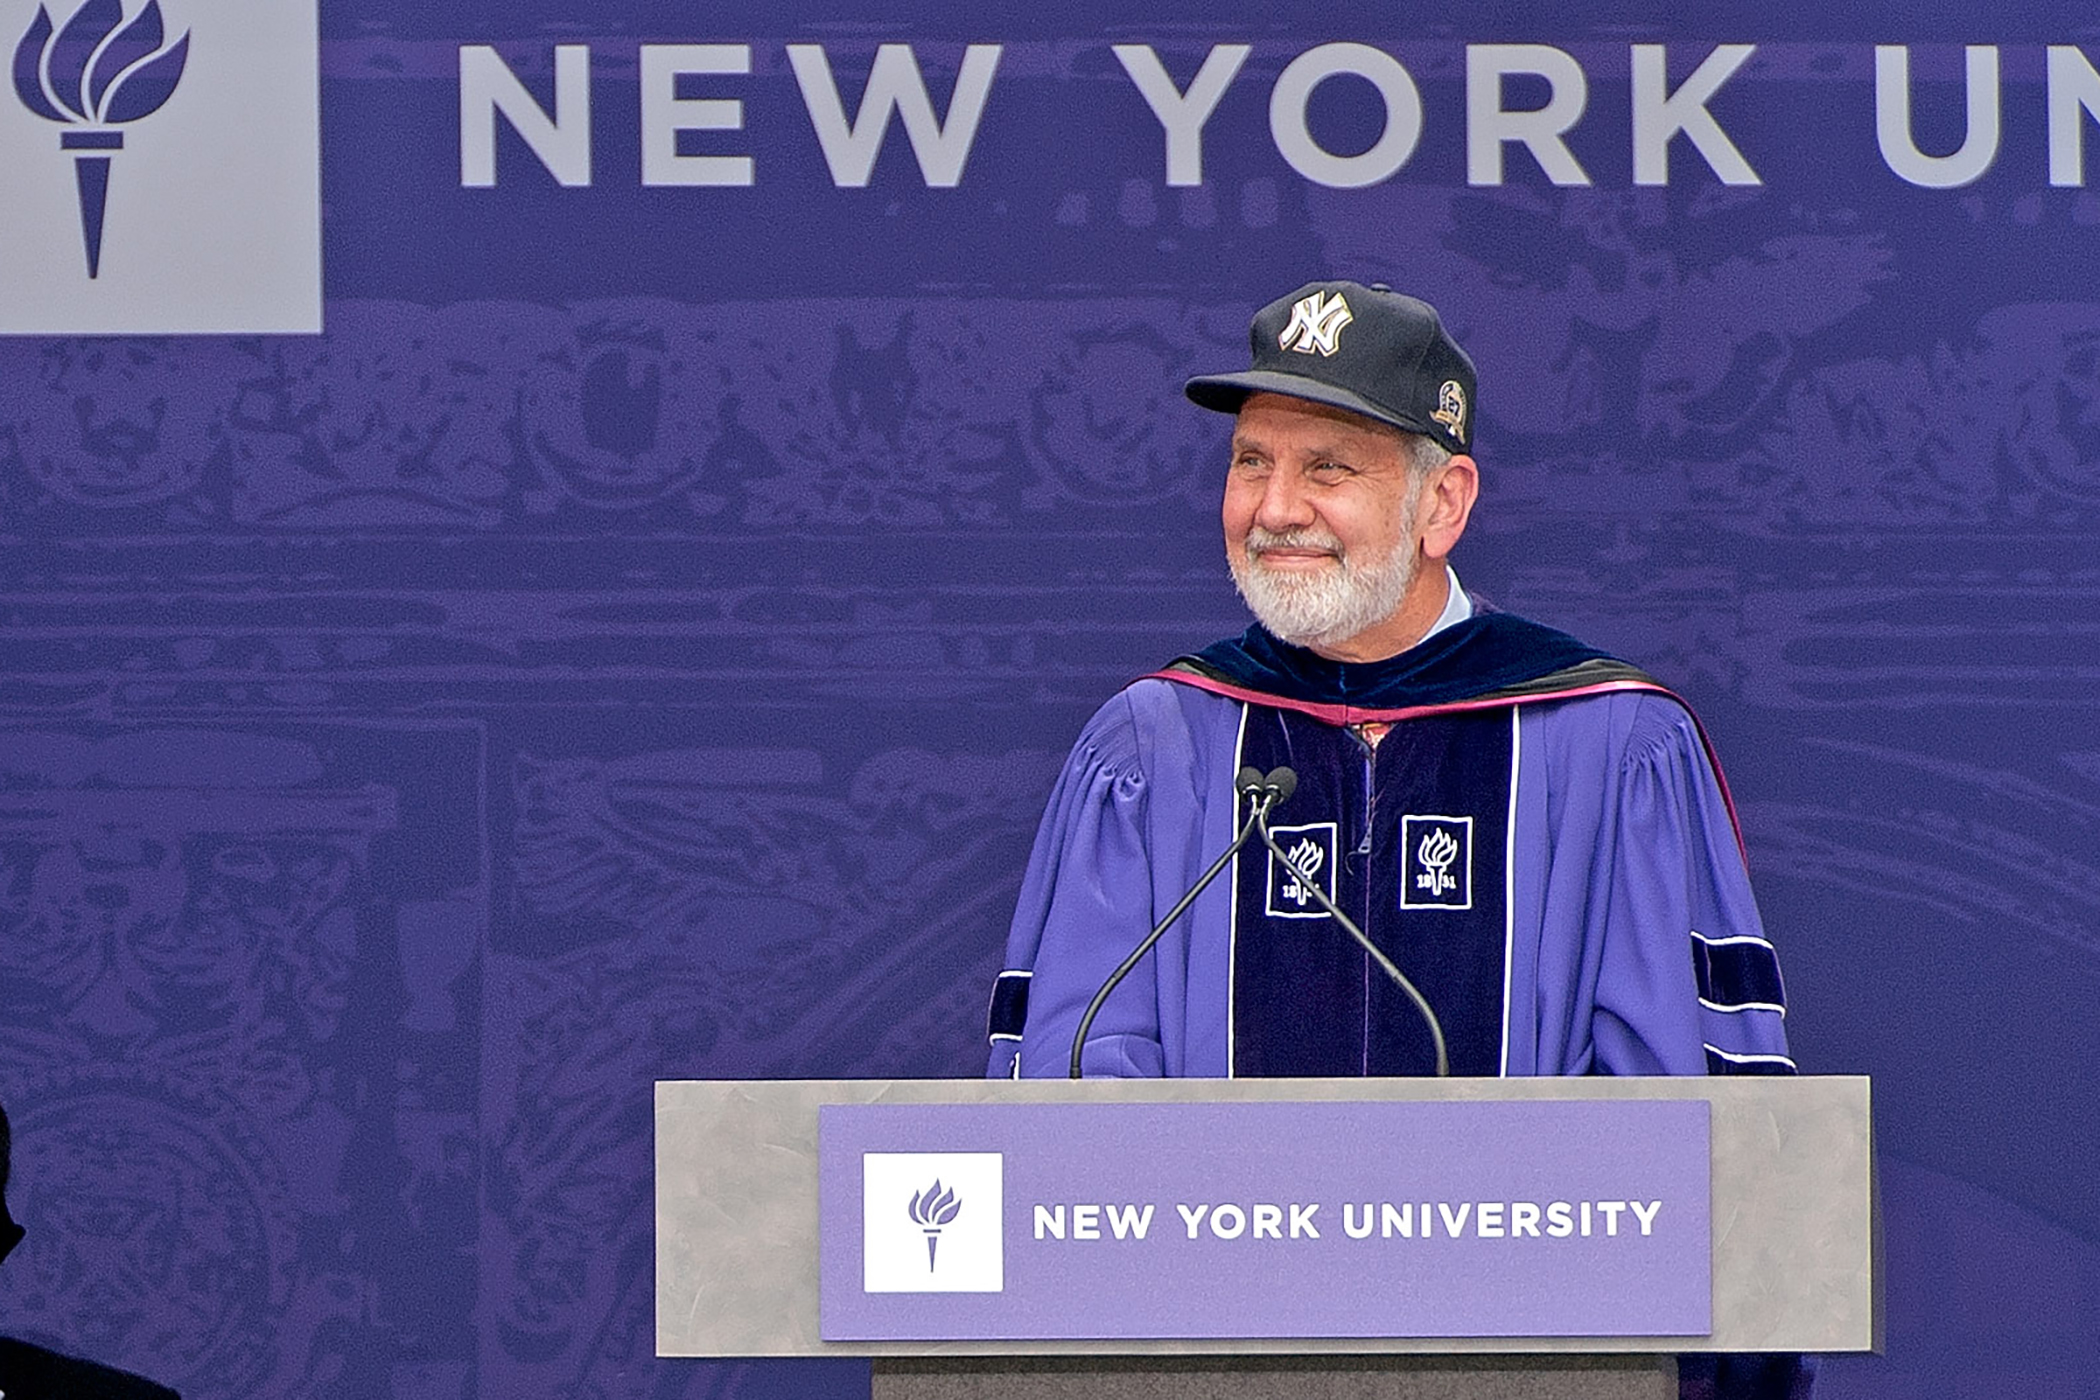 NYU President John Sexton at the 2012 New York University Commencement at Yankee Stadium on May 16, 2012 in New York City